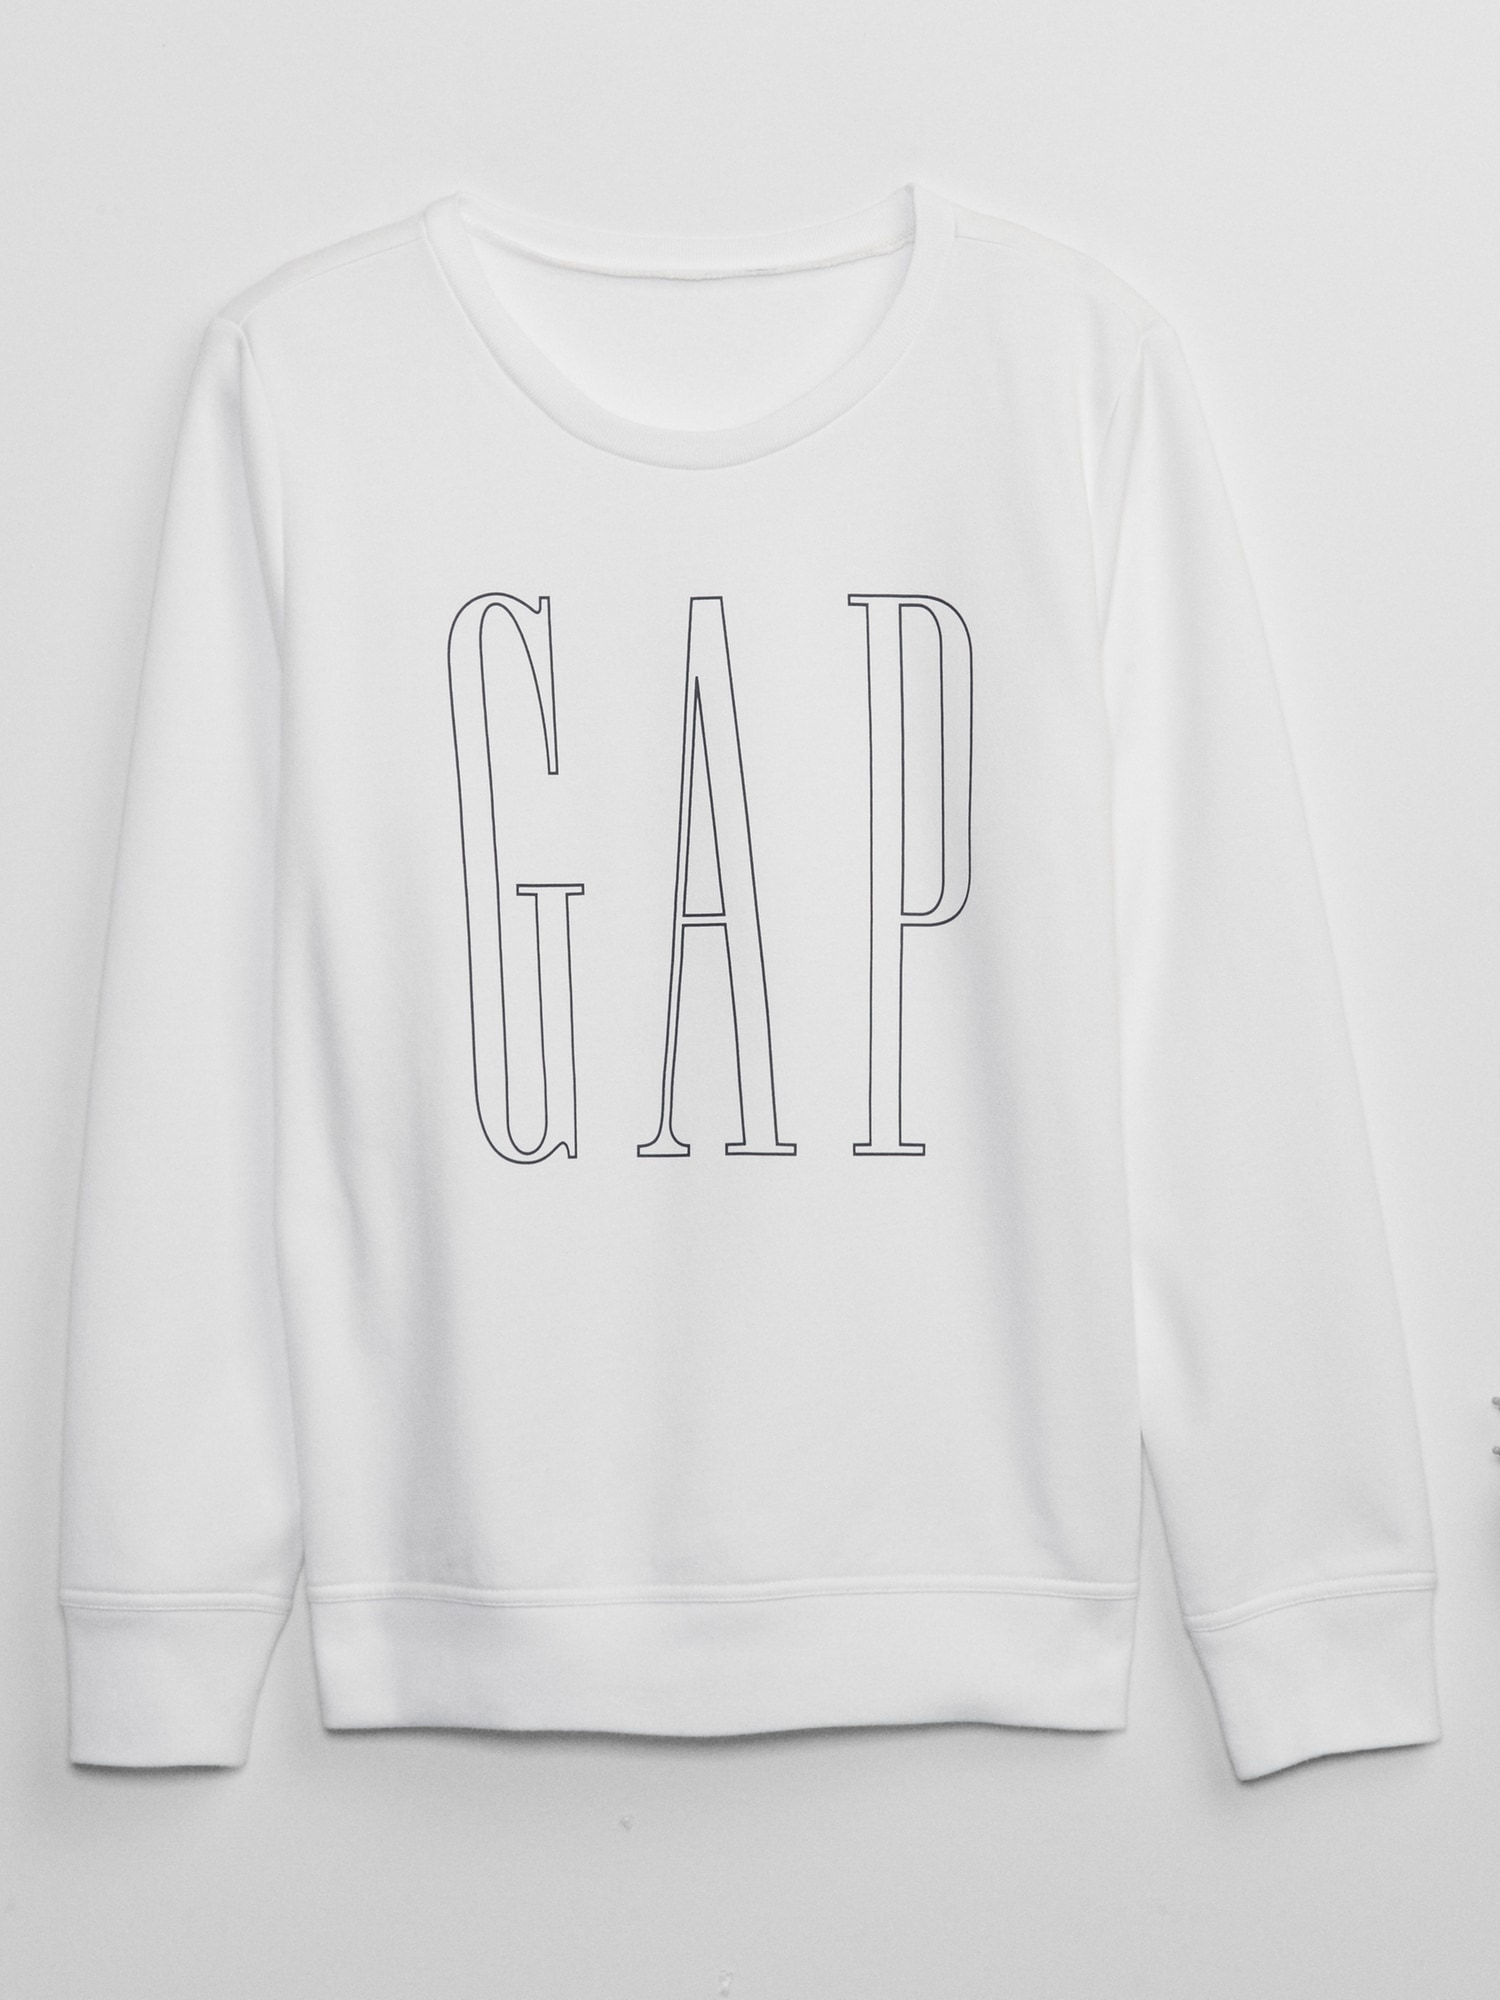 Gap Logo Sweatshirt | Gap Factory